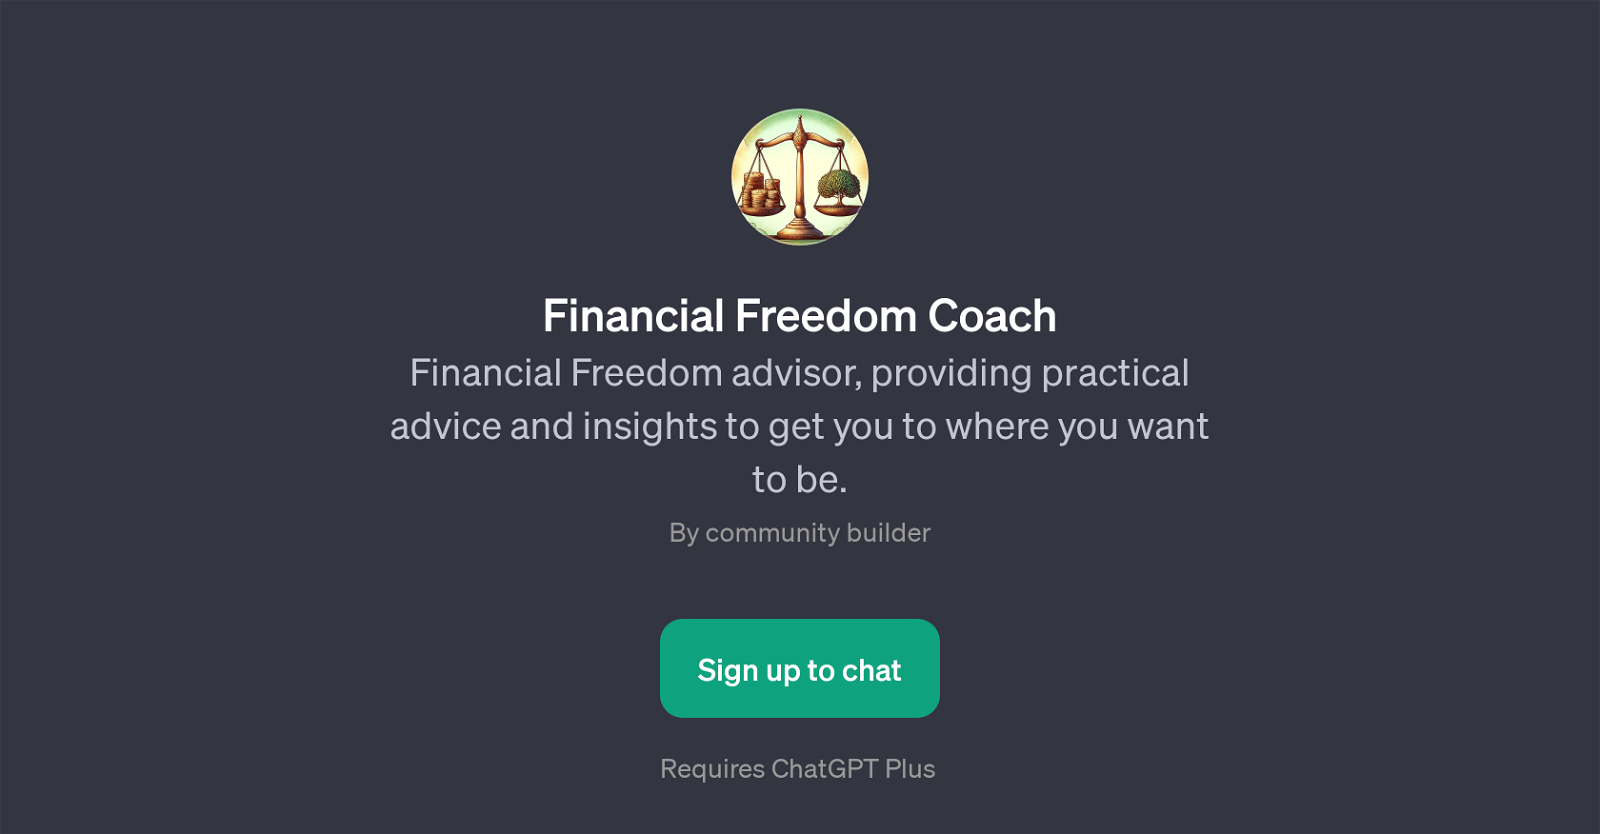 Financial Freedom Coach website